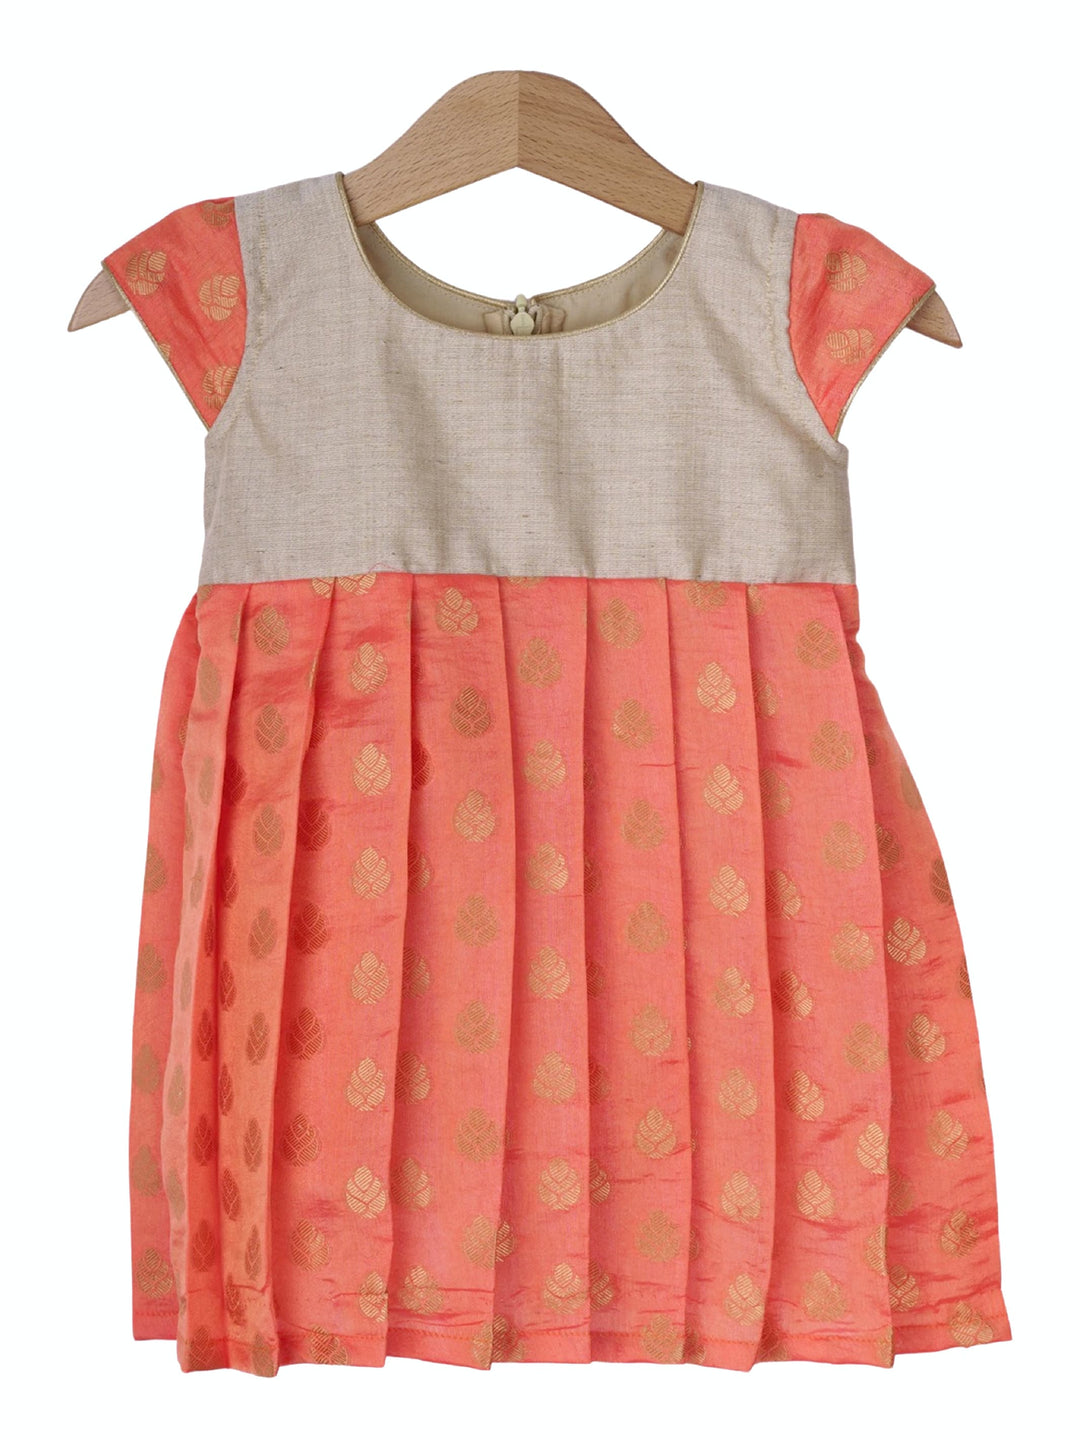 The Nesavu Baby Frock / Jhabla Bright Peach Pink Soft Semi-Silk Cotton Party Wear For Baby Girls psr silks Nesavu 12 (3M) / Coral BFJ278